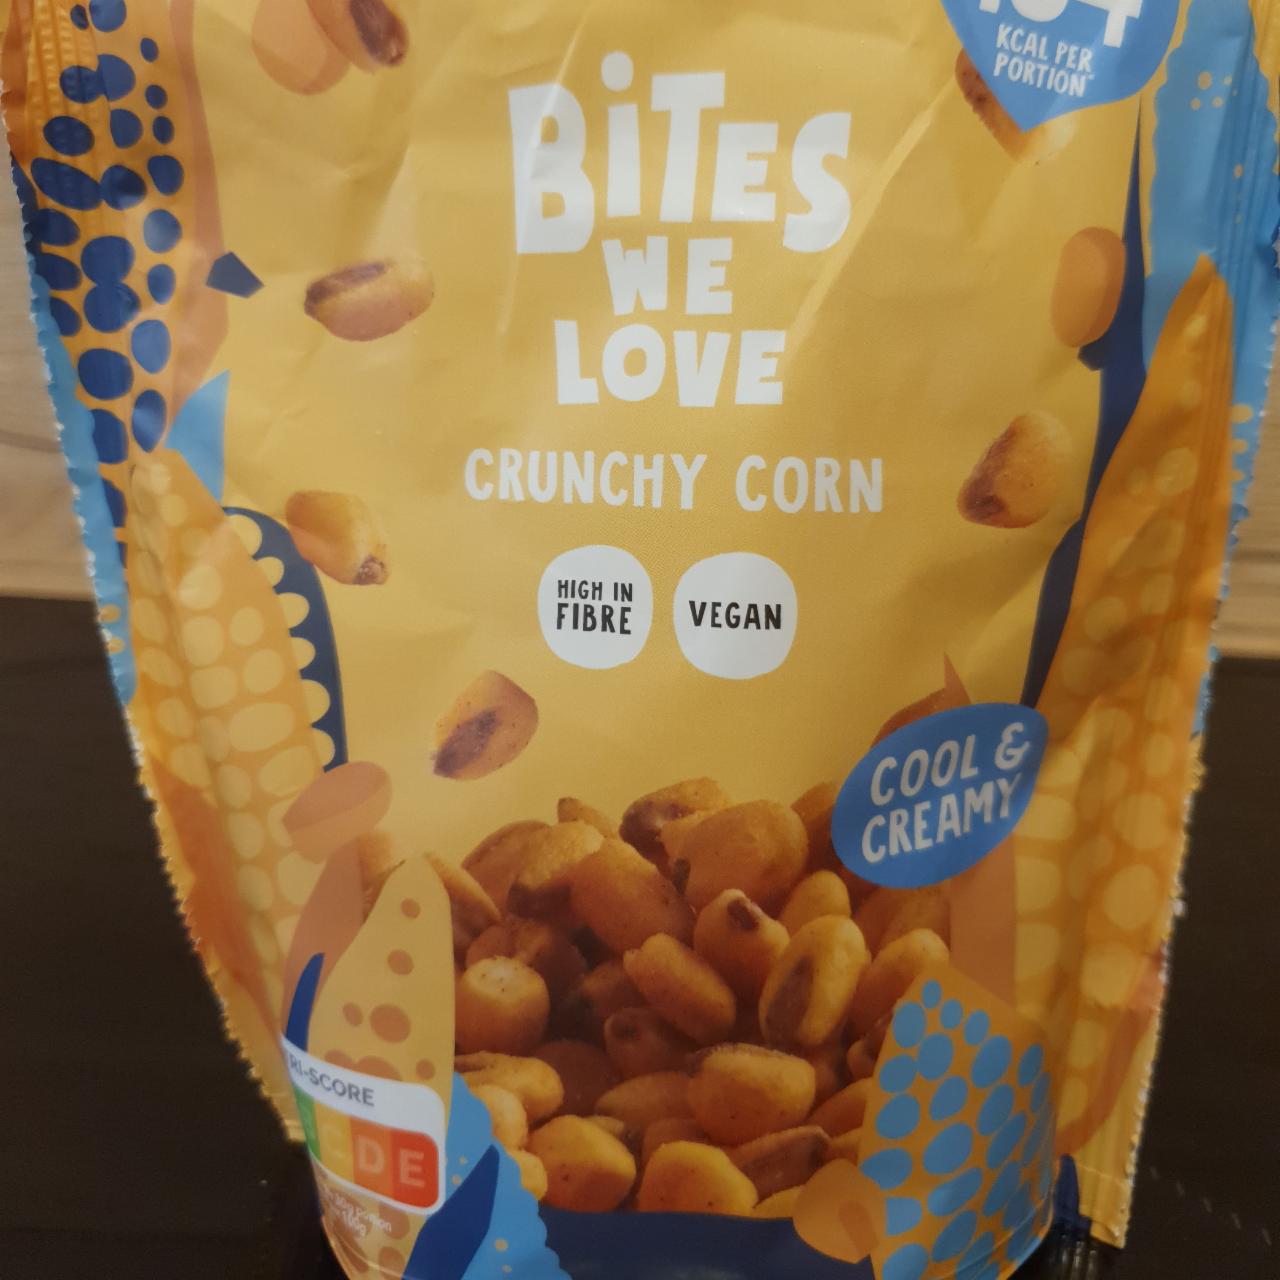 Fotografie - Crunchy Corn Cool & Creamy Bites We Love